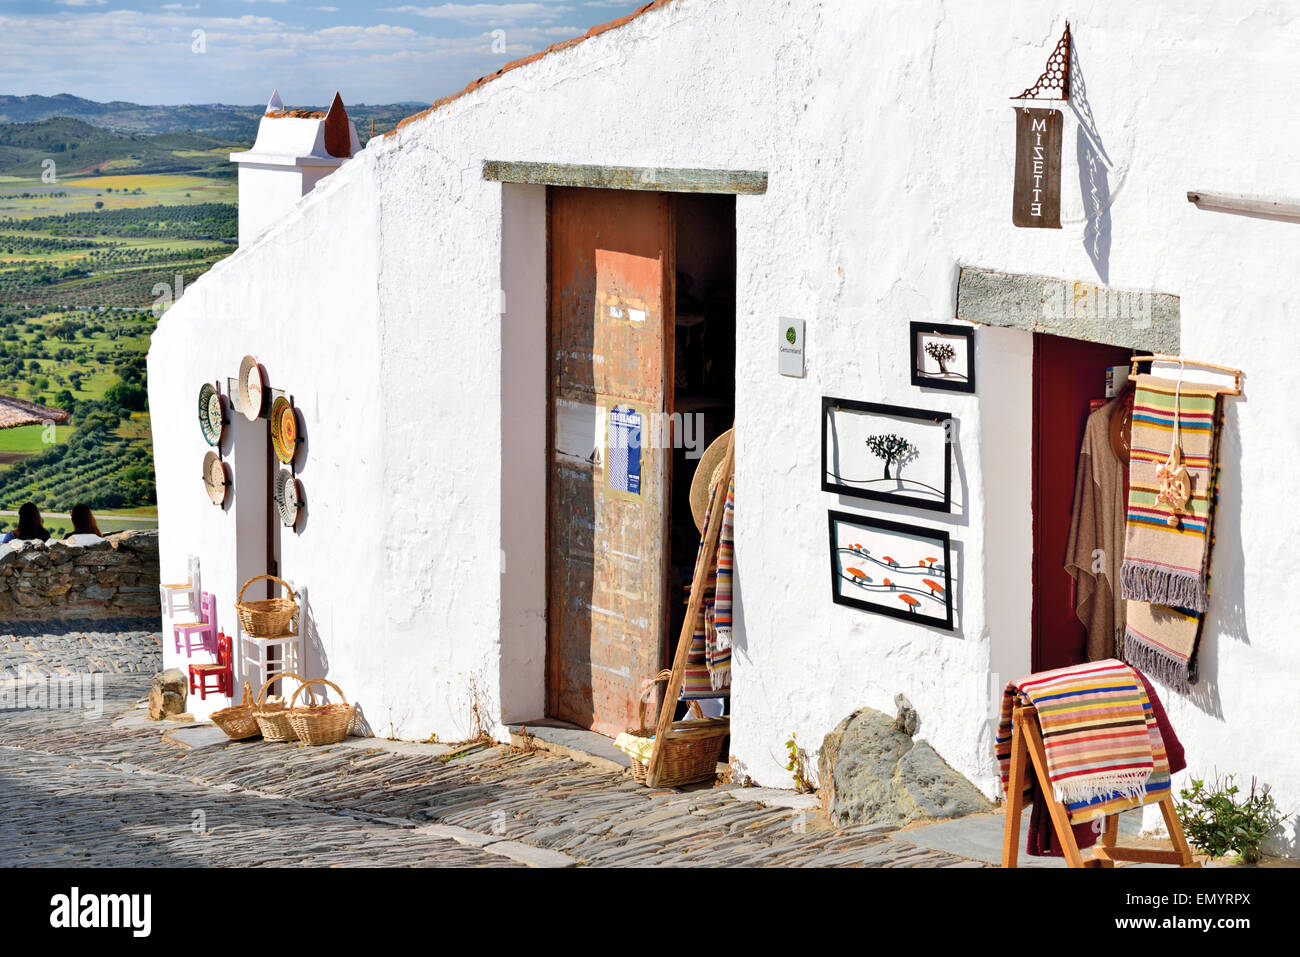 Portugal, Alentejo: Handicraft shops and panoramic view in historic village Monsaraz Stock Photo